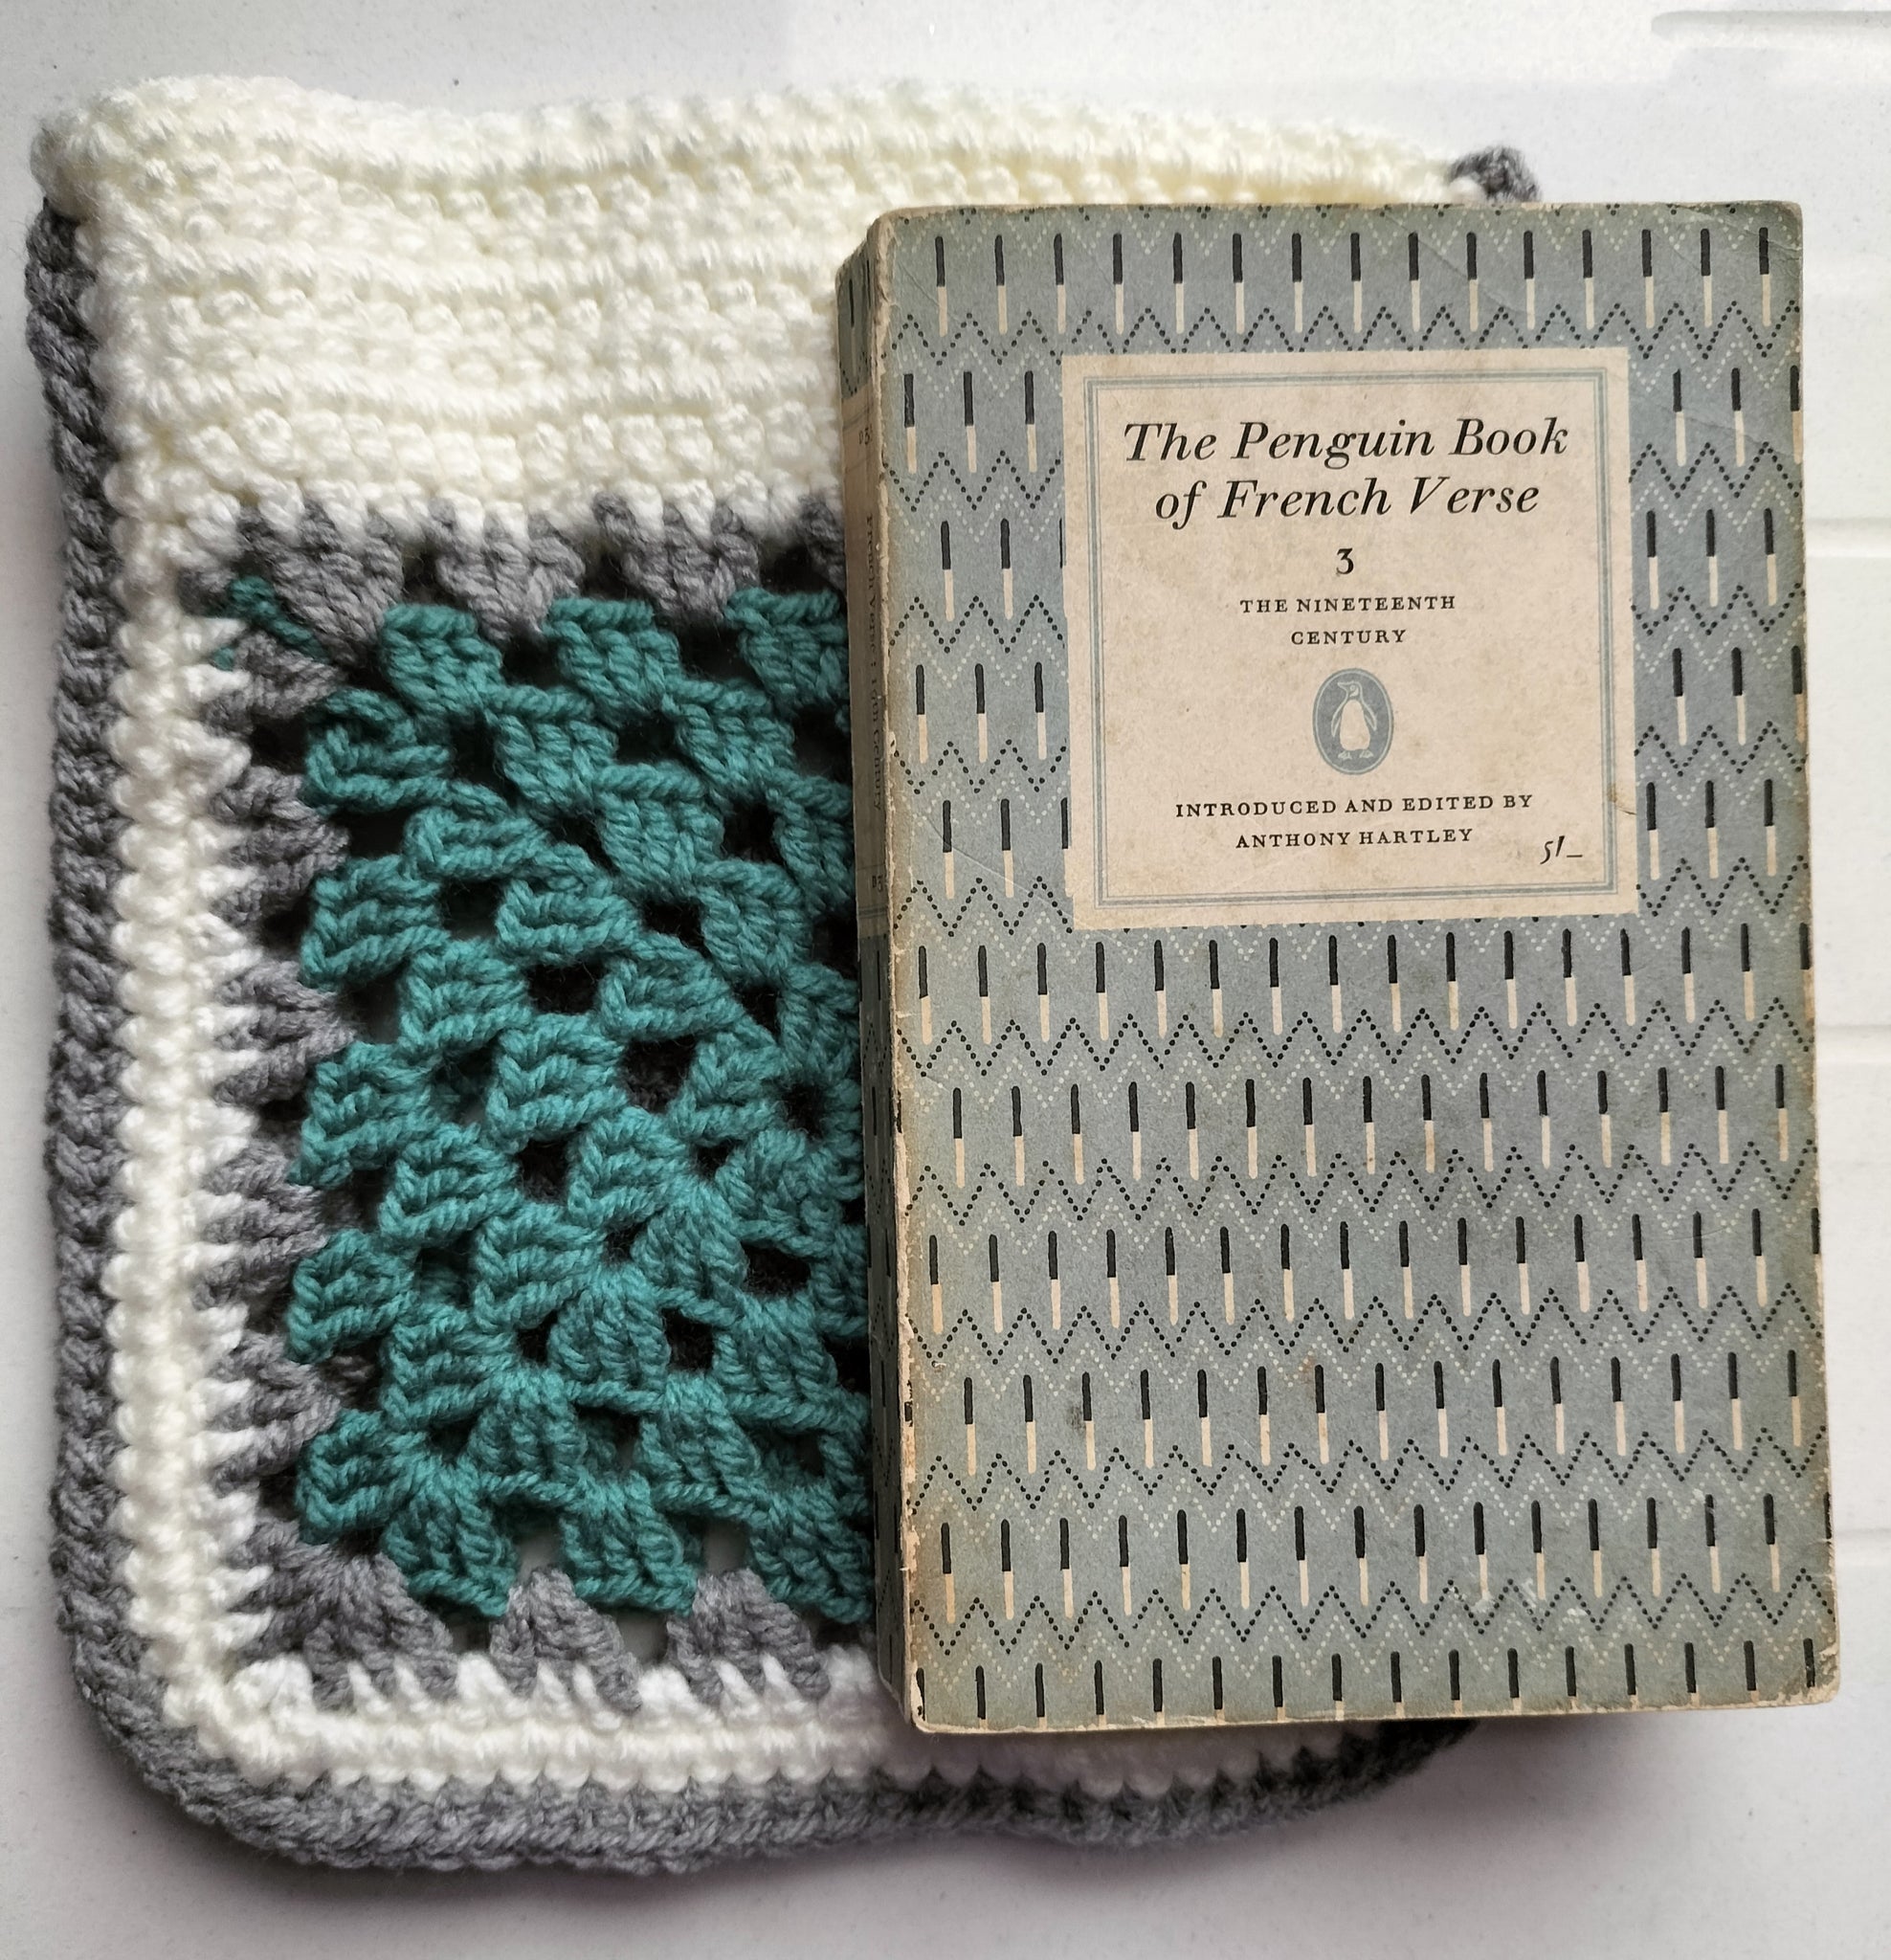 Crochet Book Cover